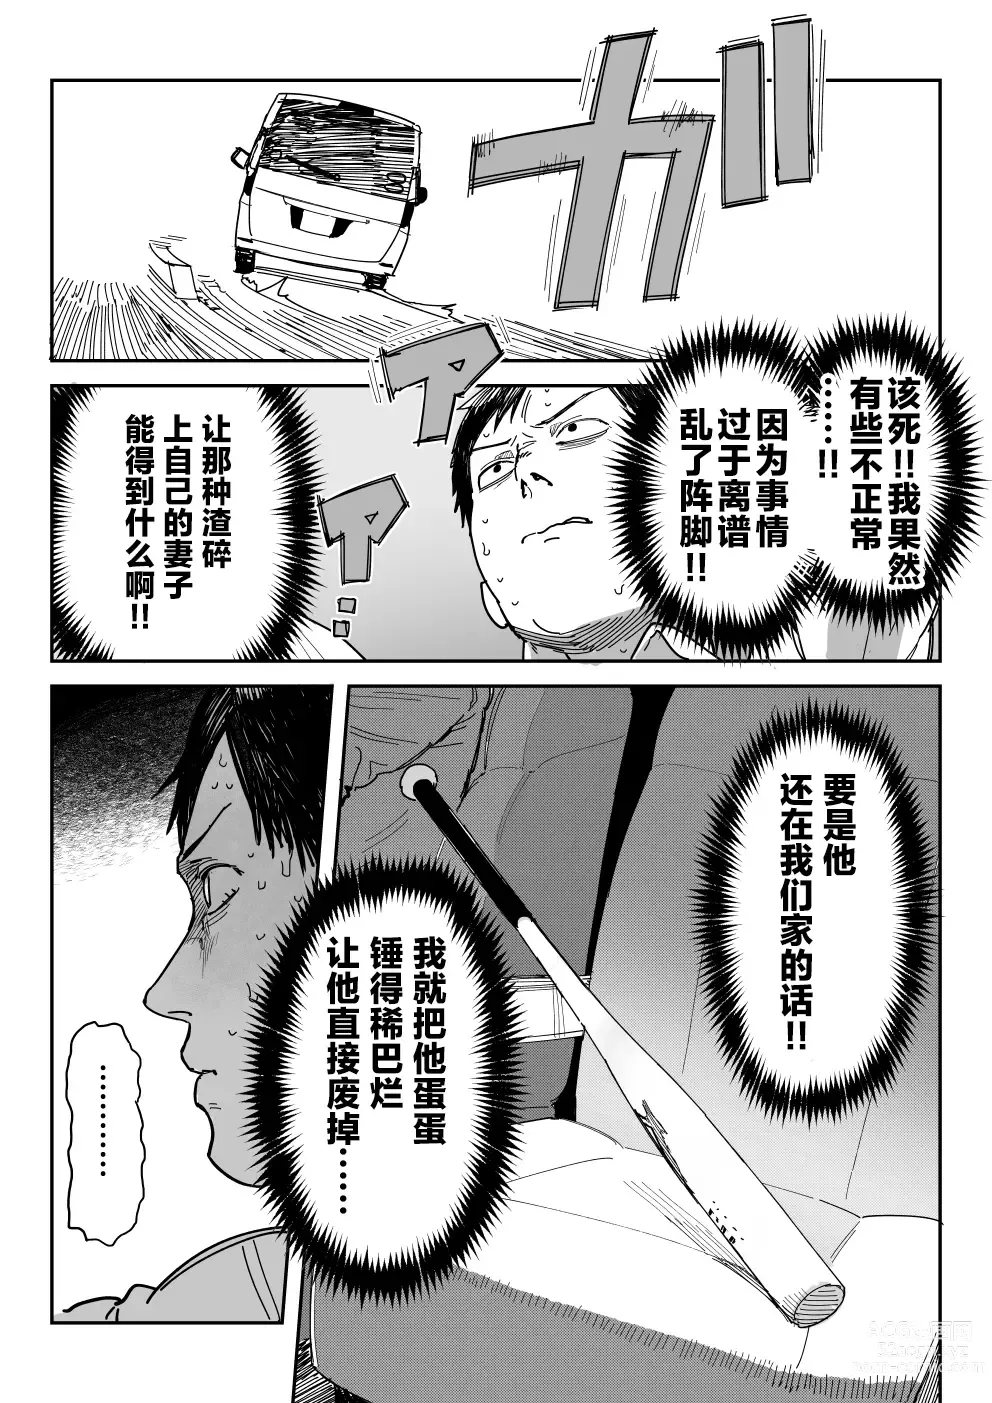 Page 61 of doujinshi 种崎佳织(39岁)代替女儿同人AV出道